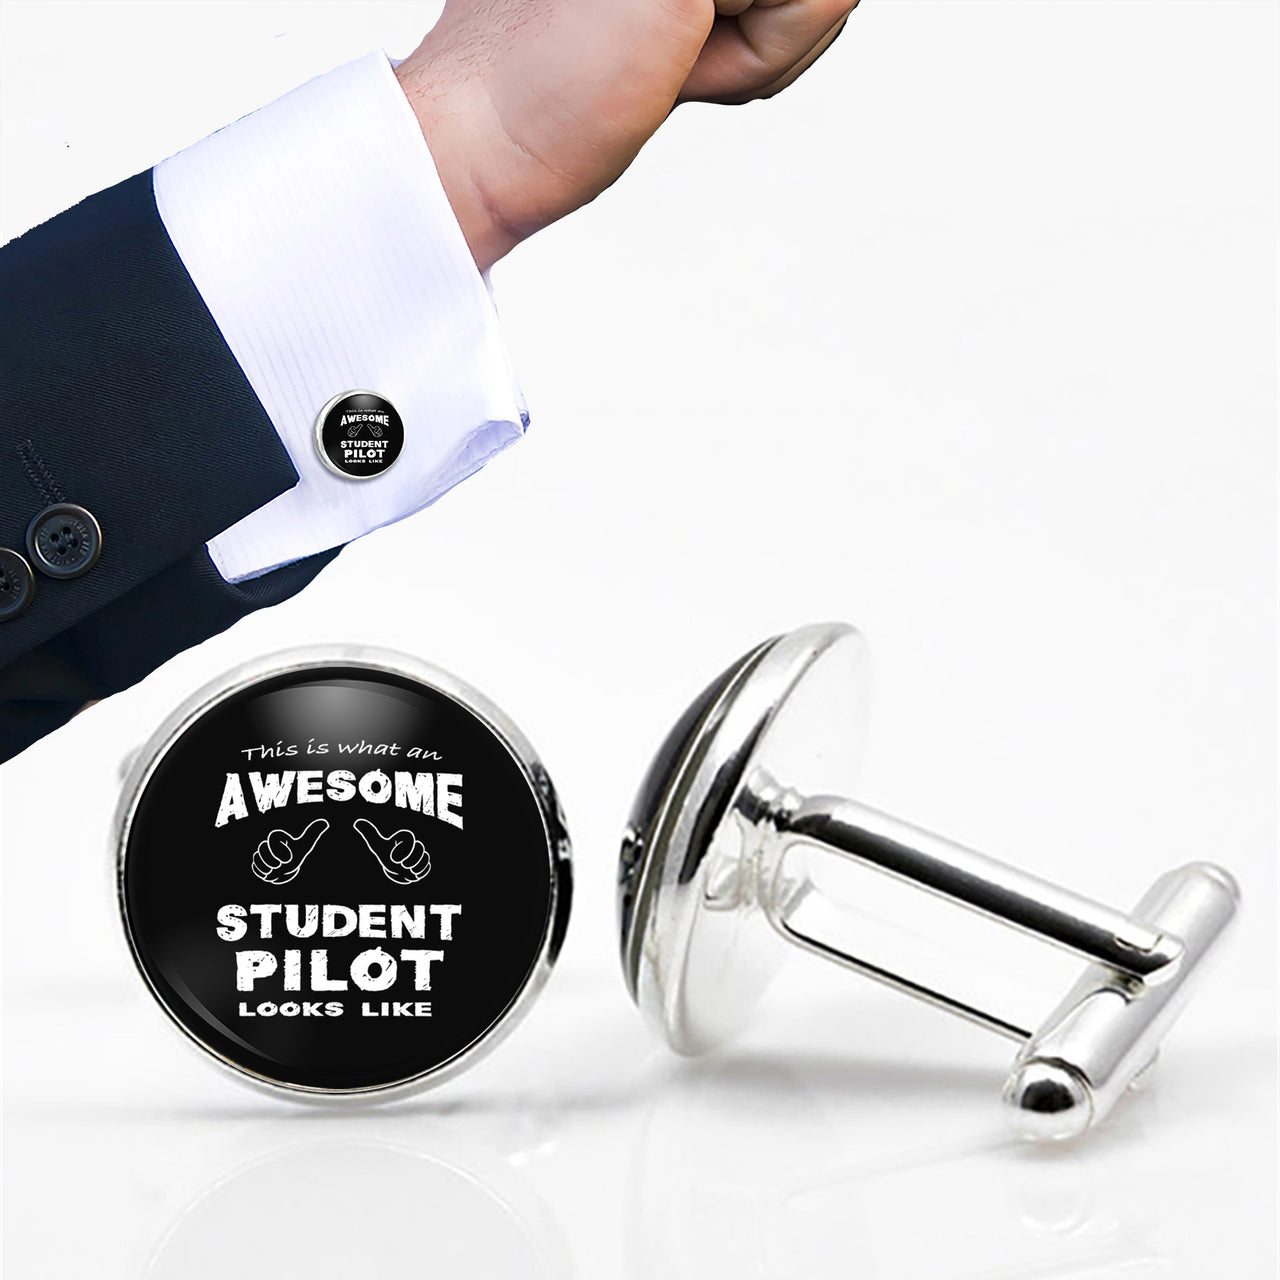 Student Pilot Designed Cuff Links